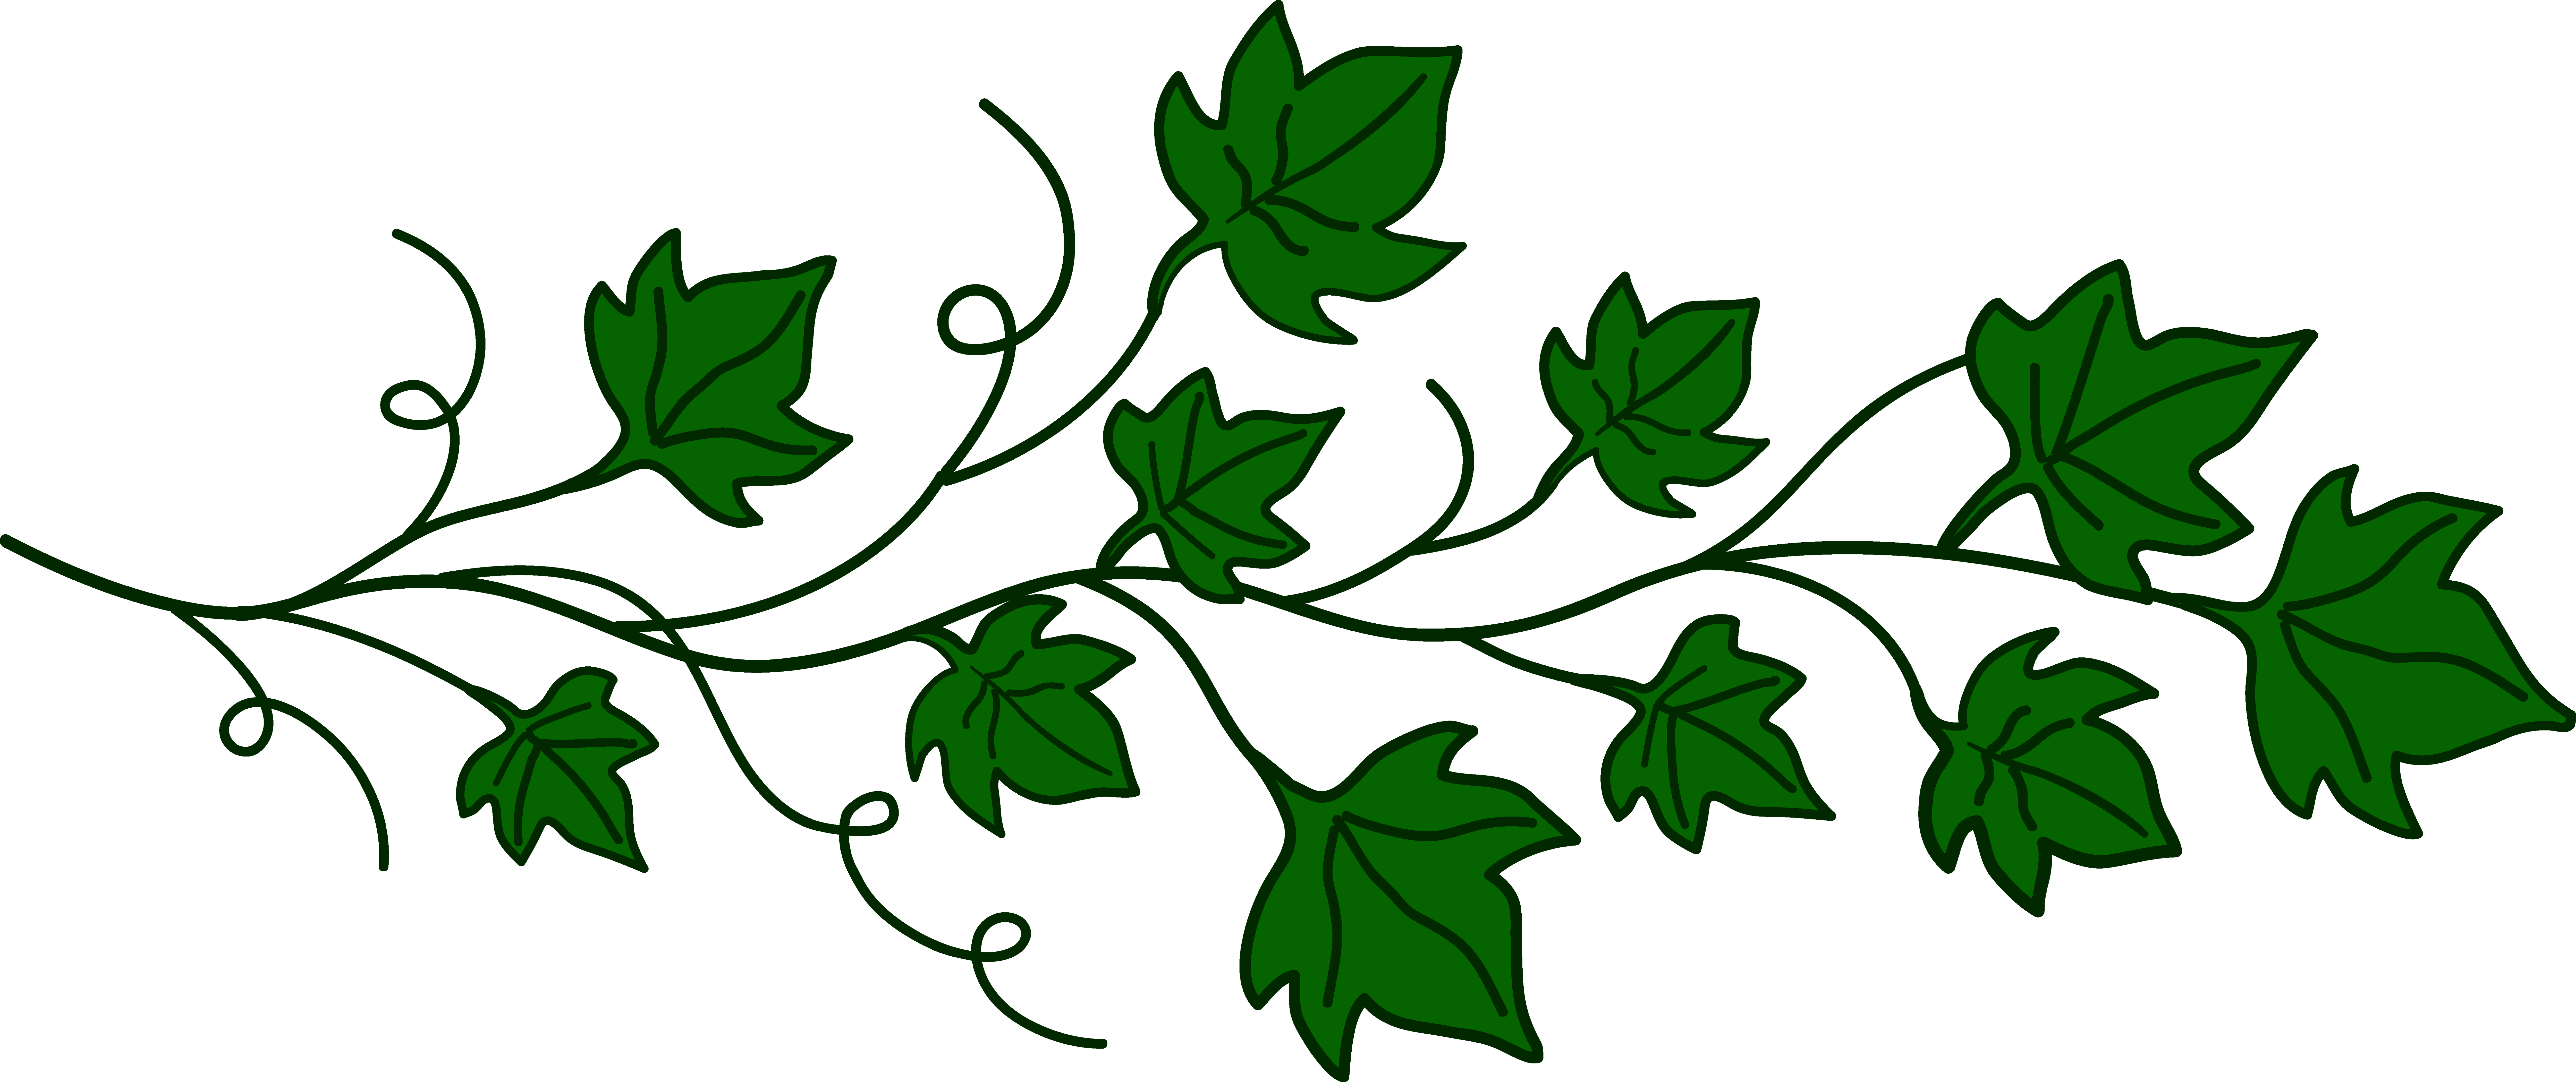 ivy vine leaves